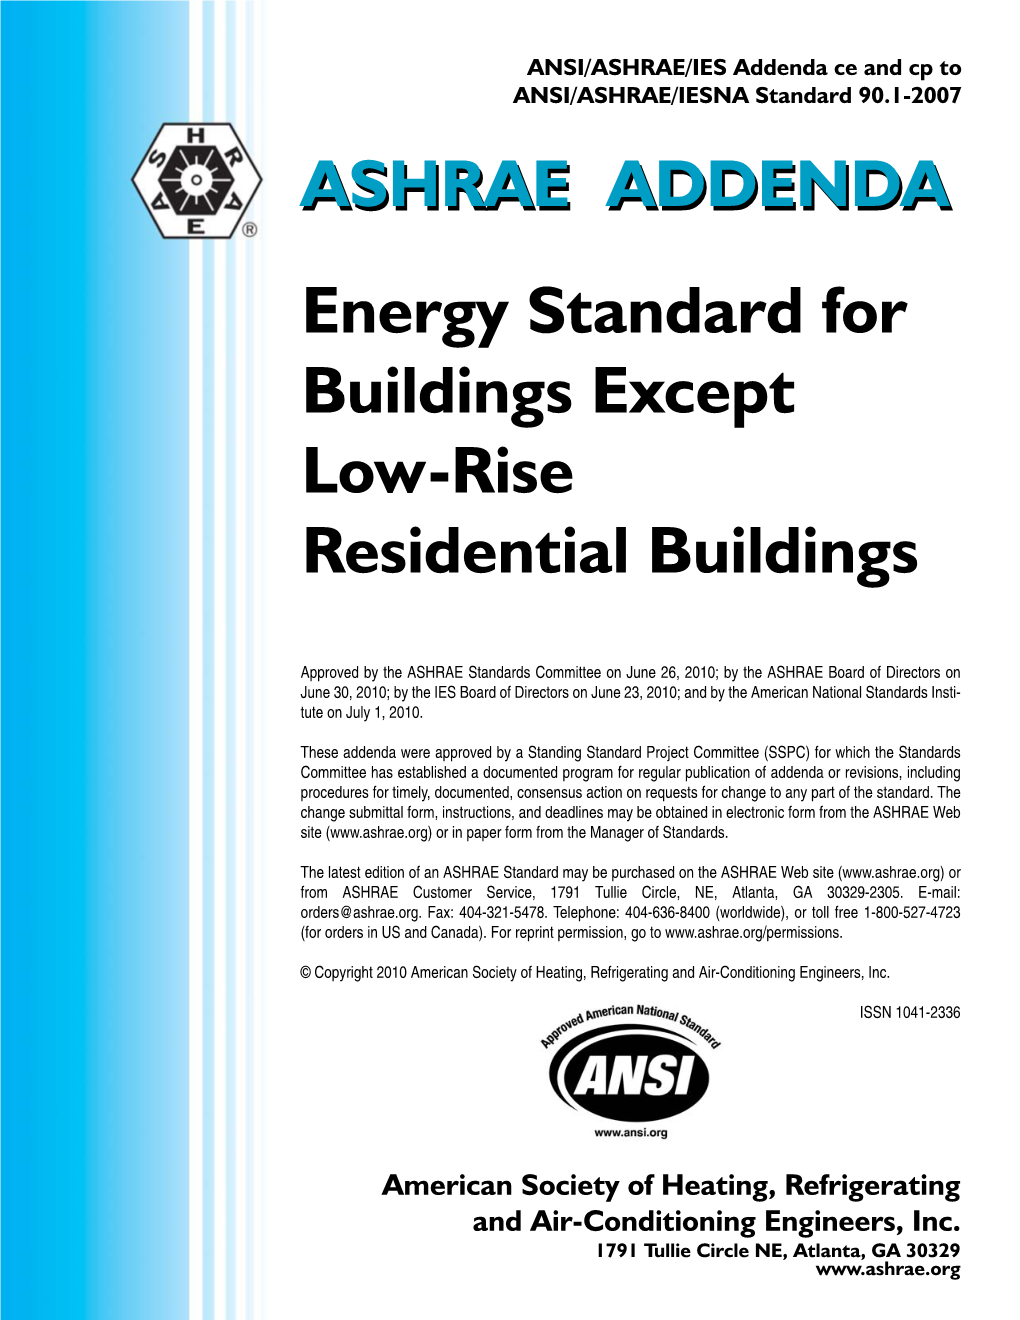 Standard 90.1-2007 ASHRAEASHRAE ADDENDAADDENDA Energy Standard for Buildings Except Low-Rise Residential Buildings